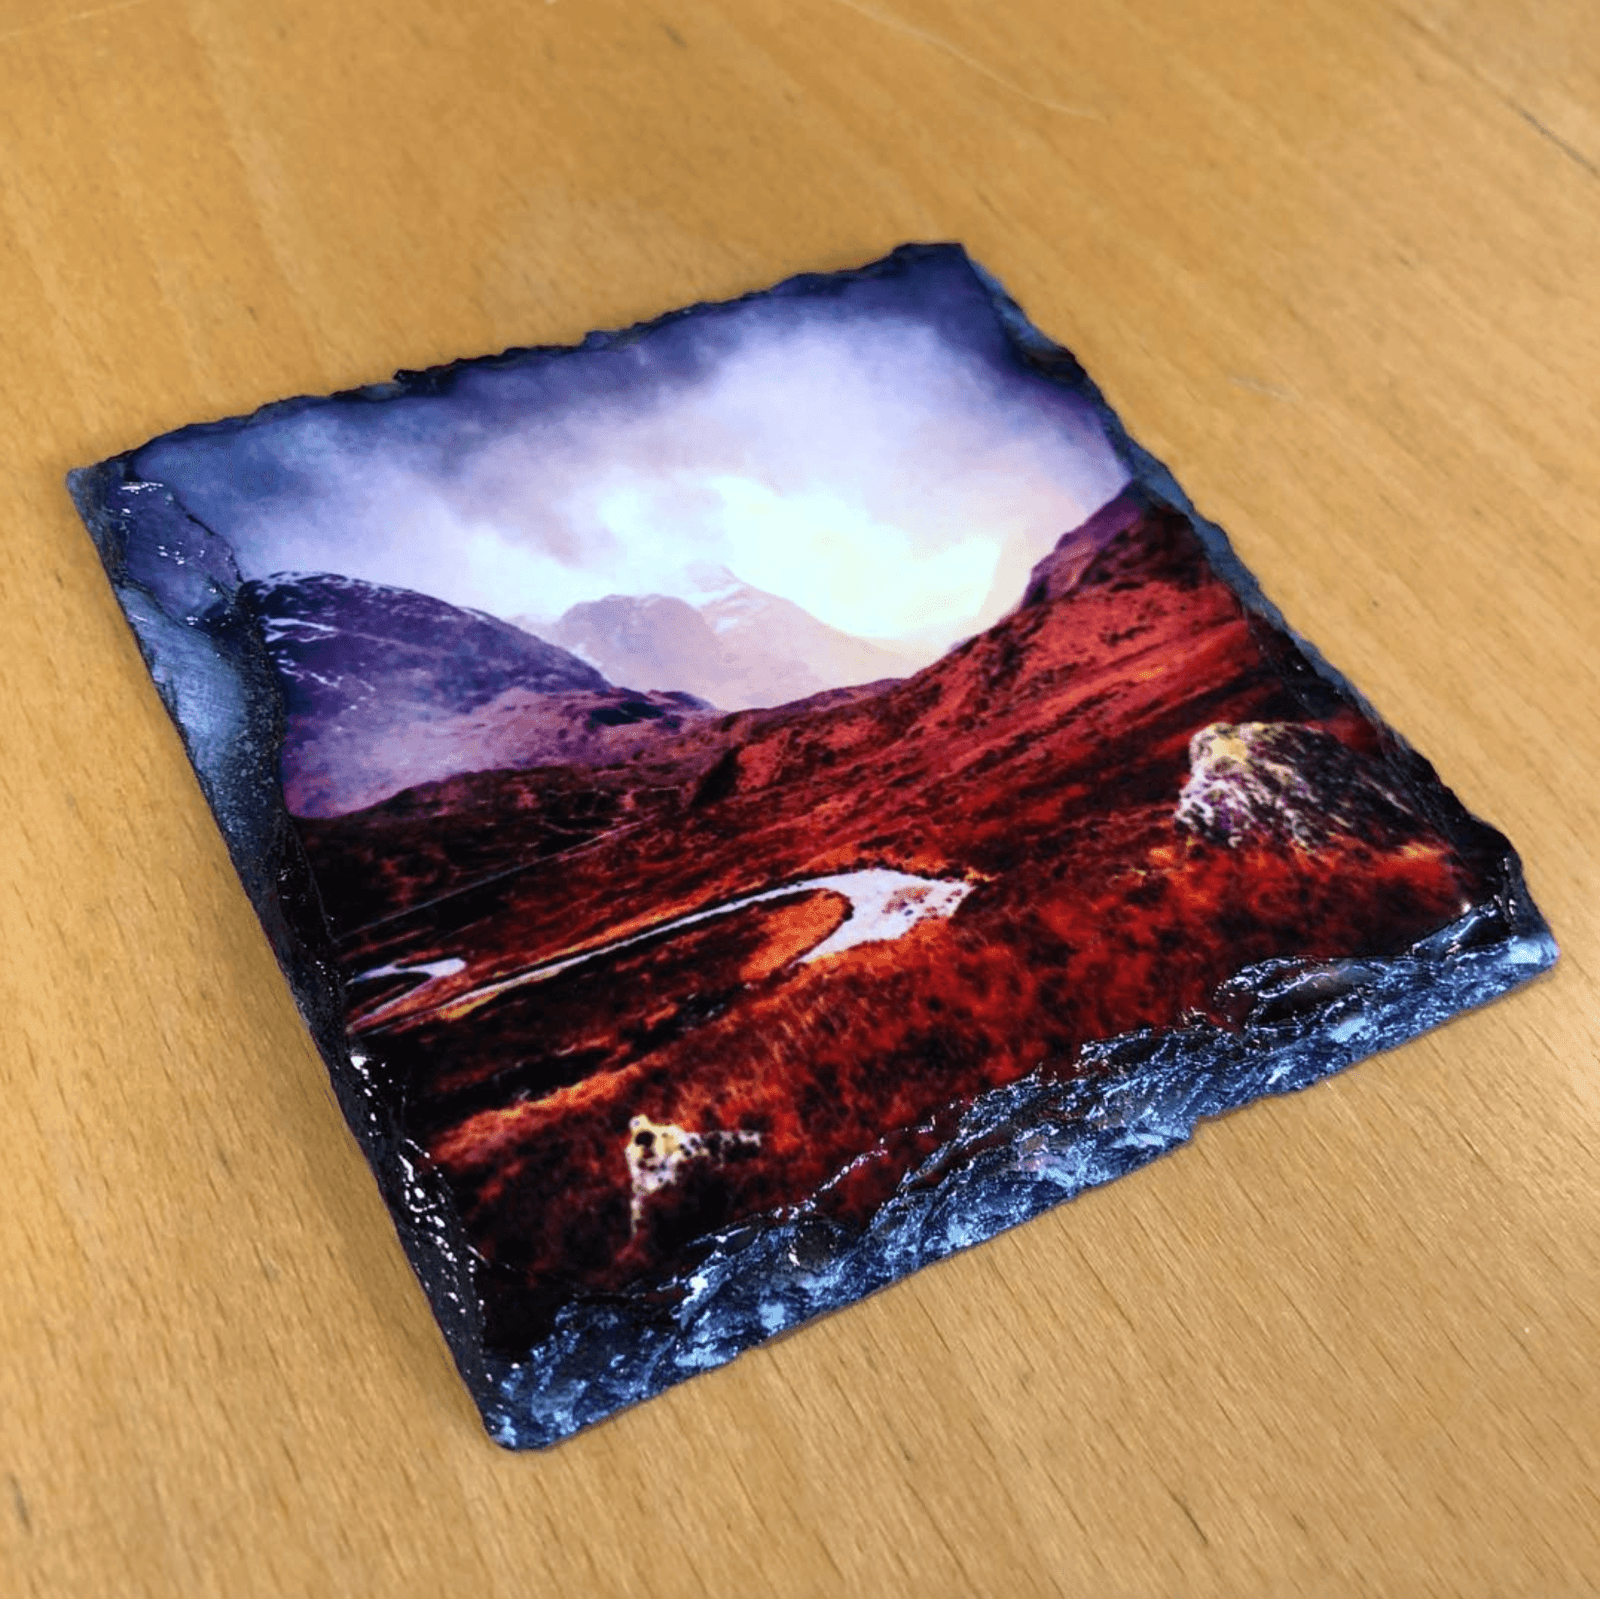 A Moonlit Highland Wood ii Scottish Slate Art-Slate Art-Scottish Highlands & Lowlands Art Gallery-Paintings, Prints, Homeware, Art Gifts From Scotland By Scottish Artist Kevin Hunter